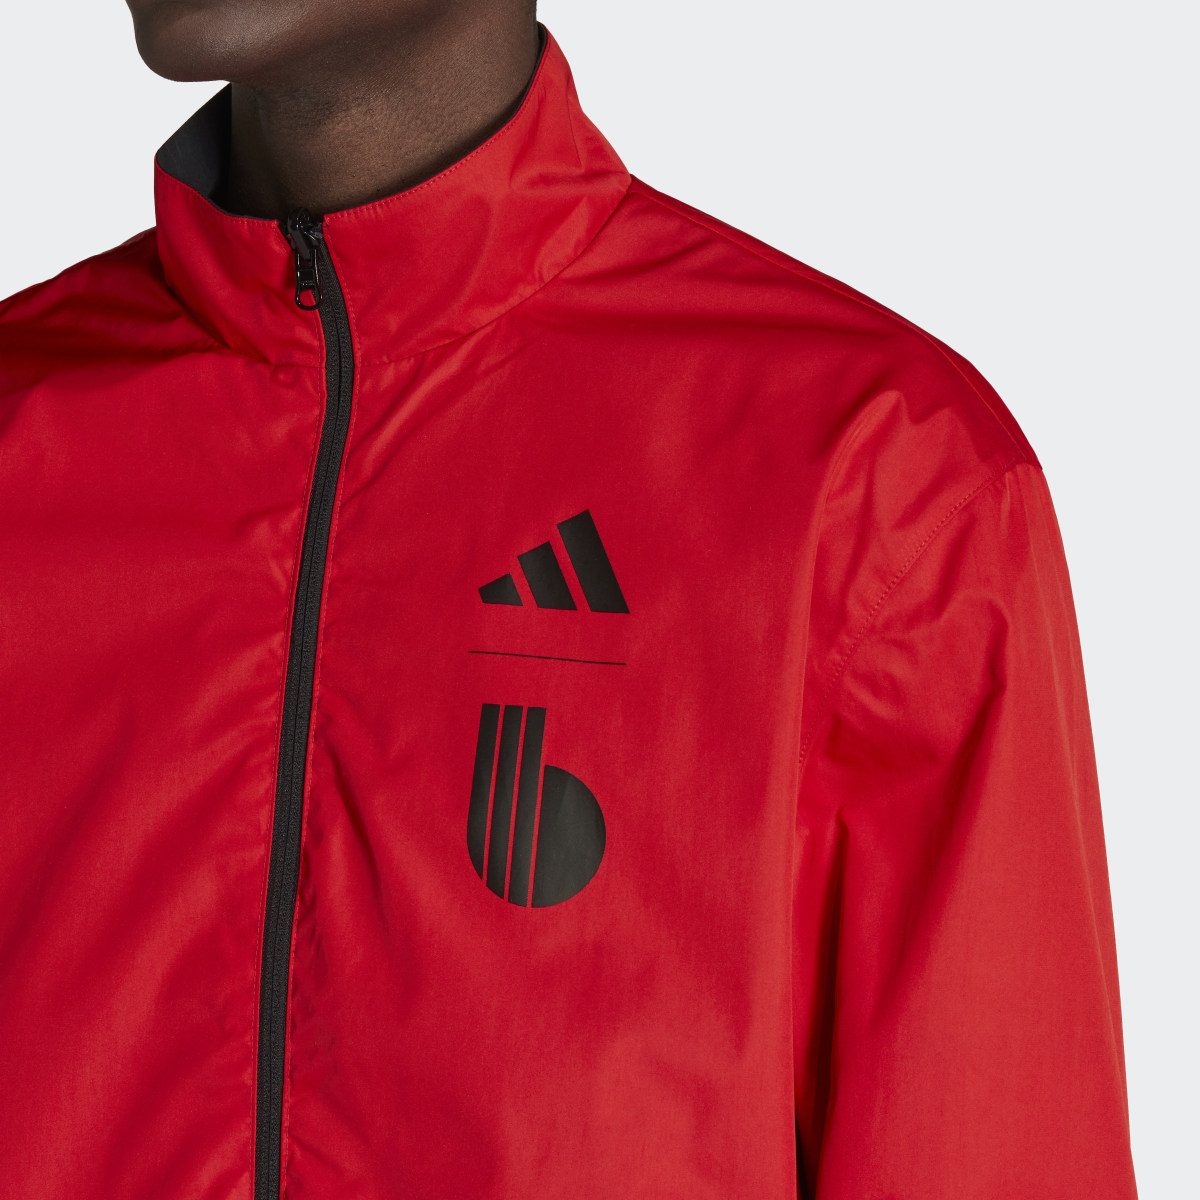 Adidas Belgium Anthem Jacket. 7